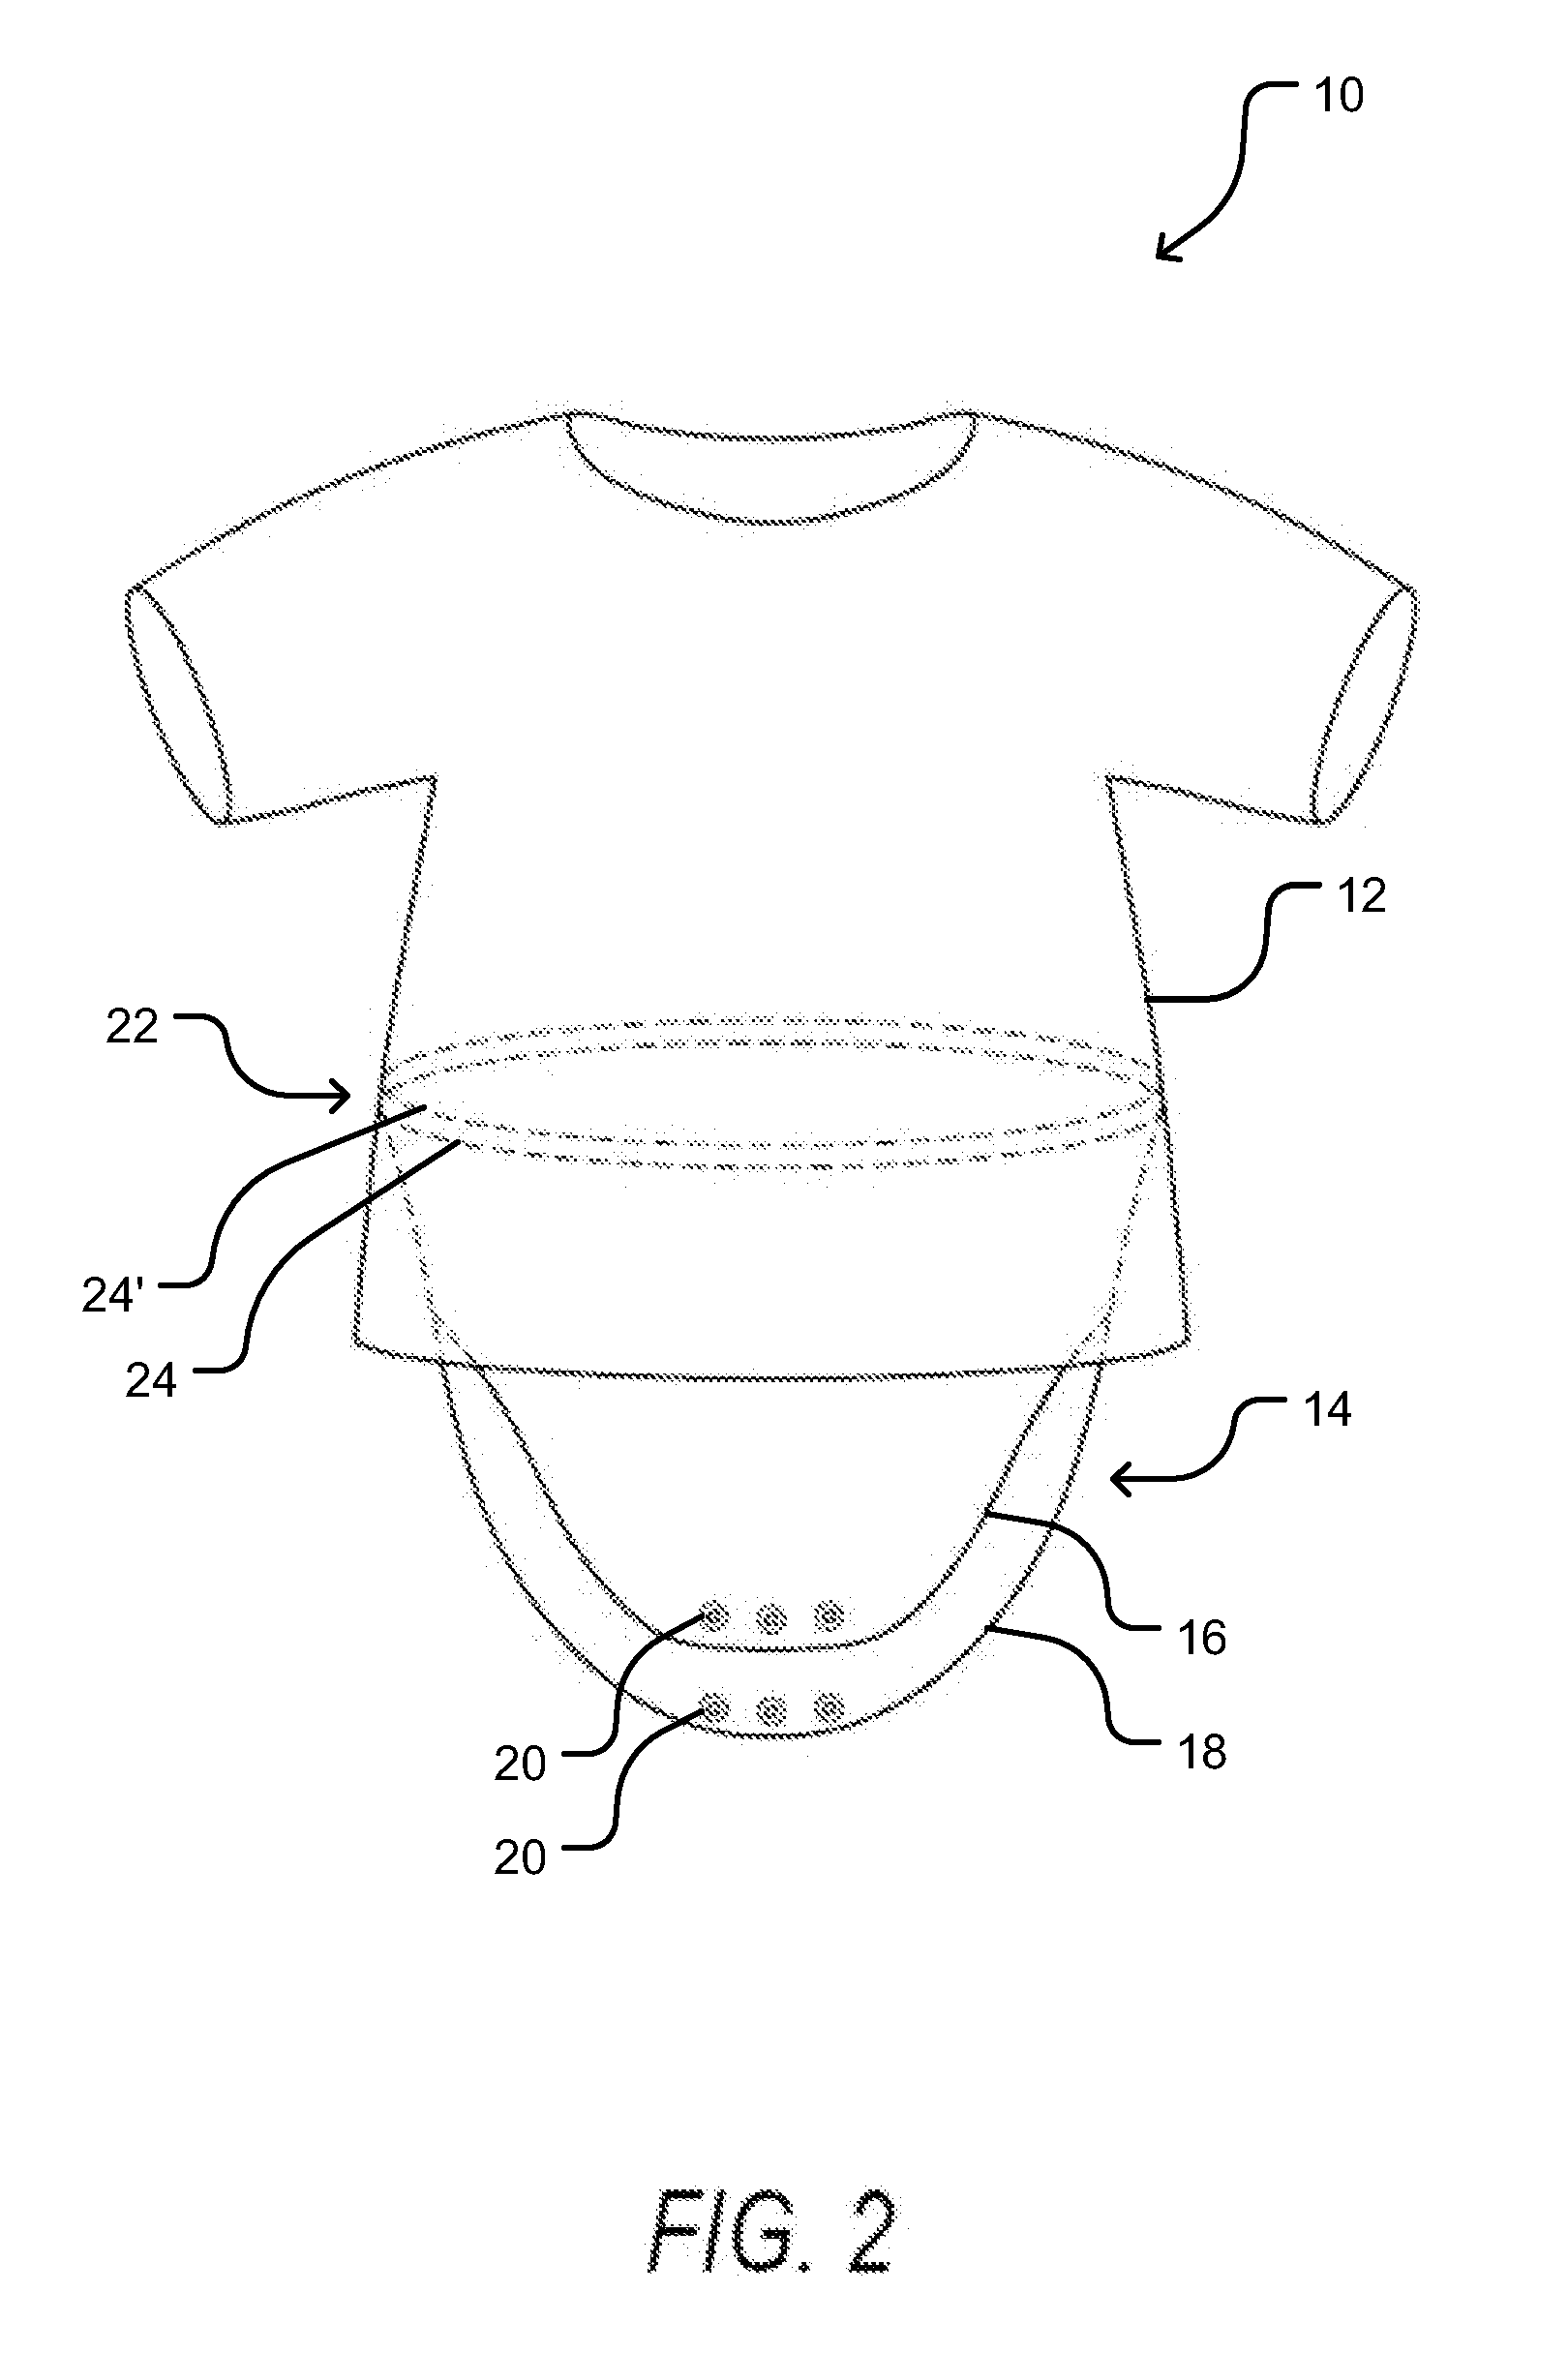 Upper body garment